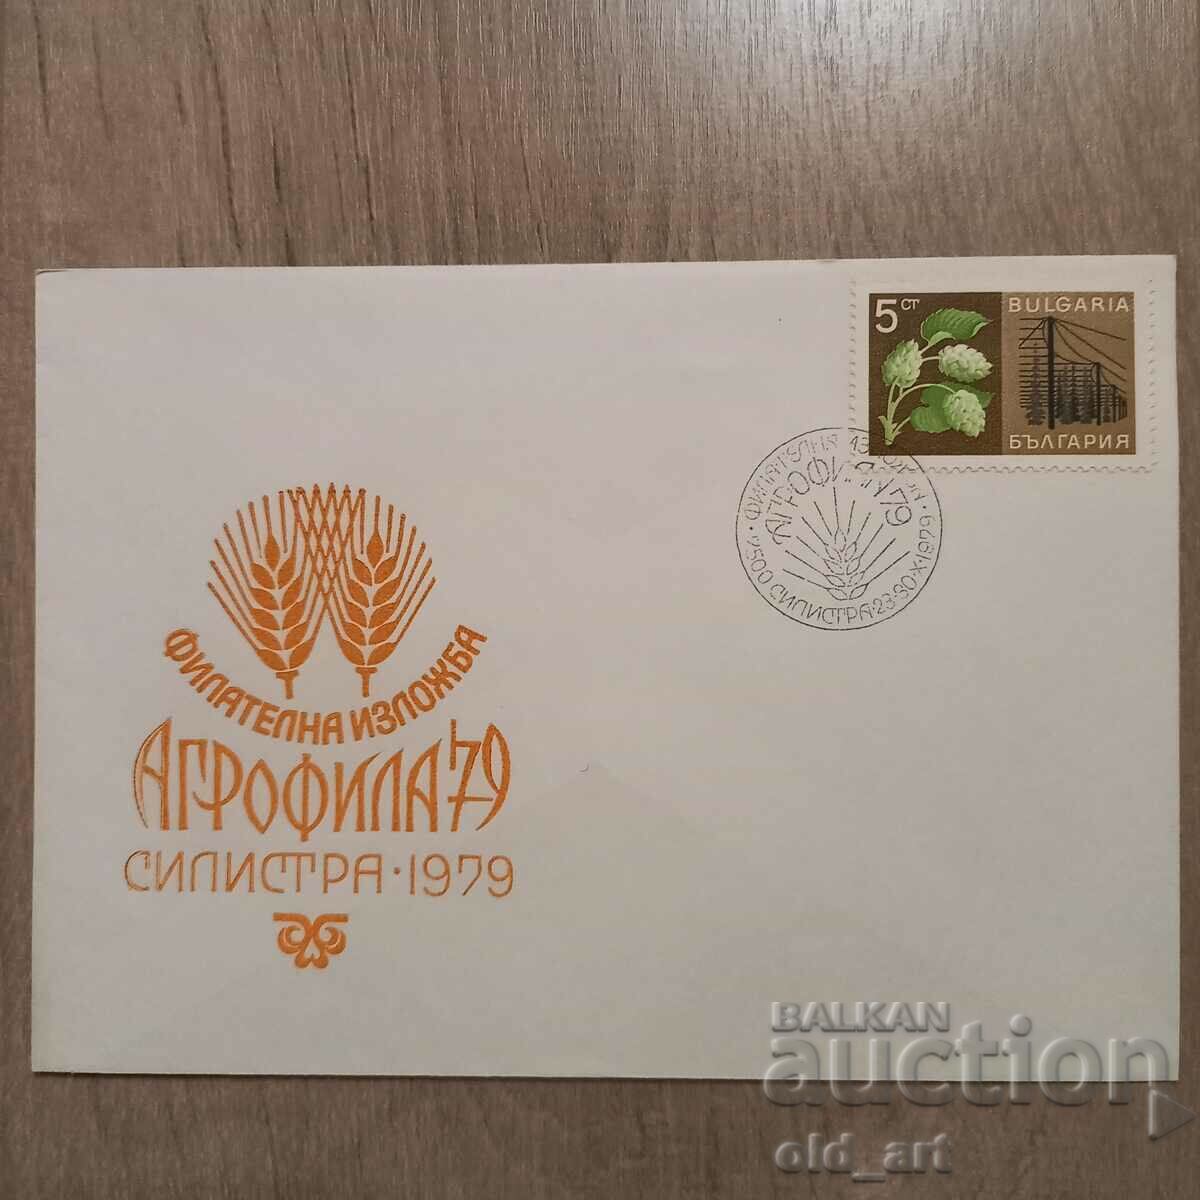 Plic postal - Filat. expozitia Agrofila 79